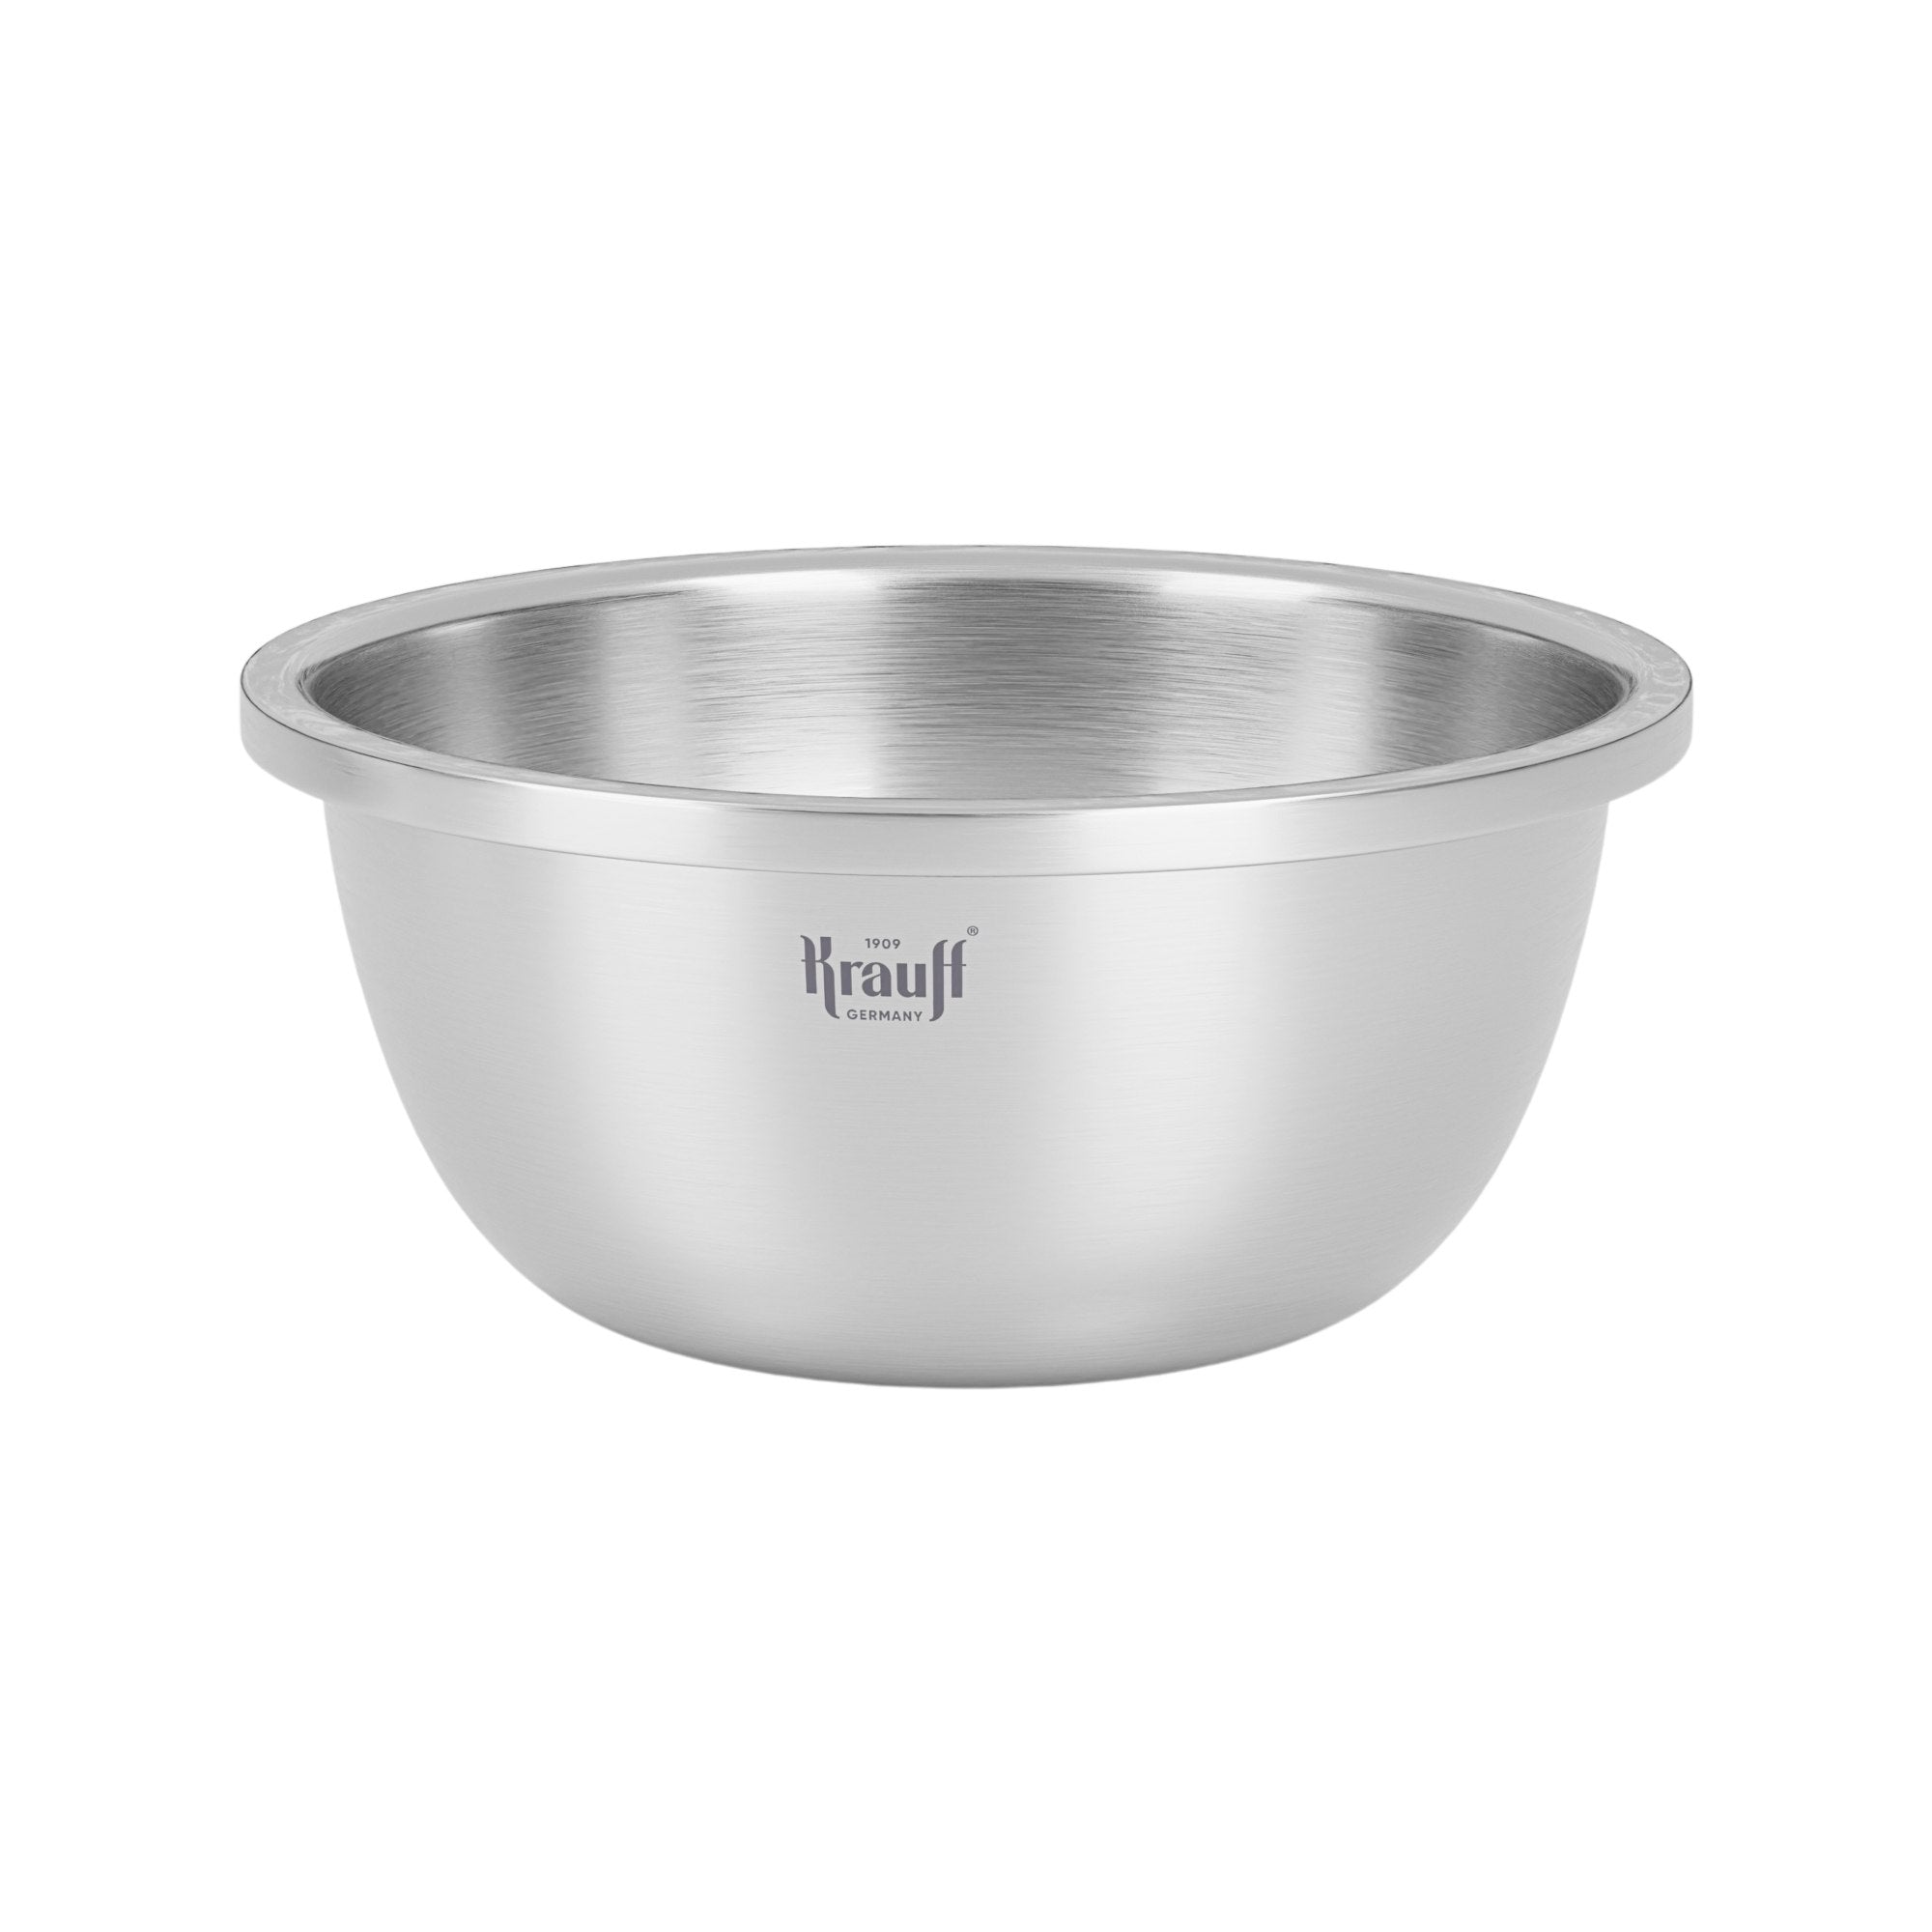 Stainless steel kitchen bowl, 2.3 liters Hauslish